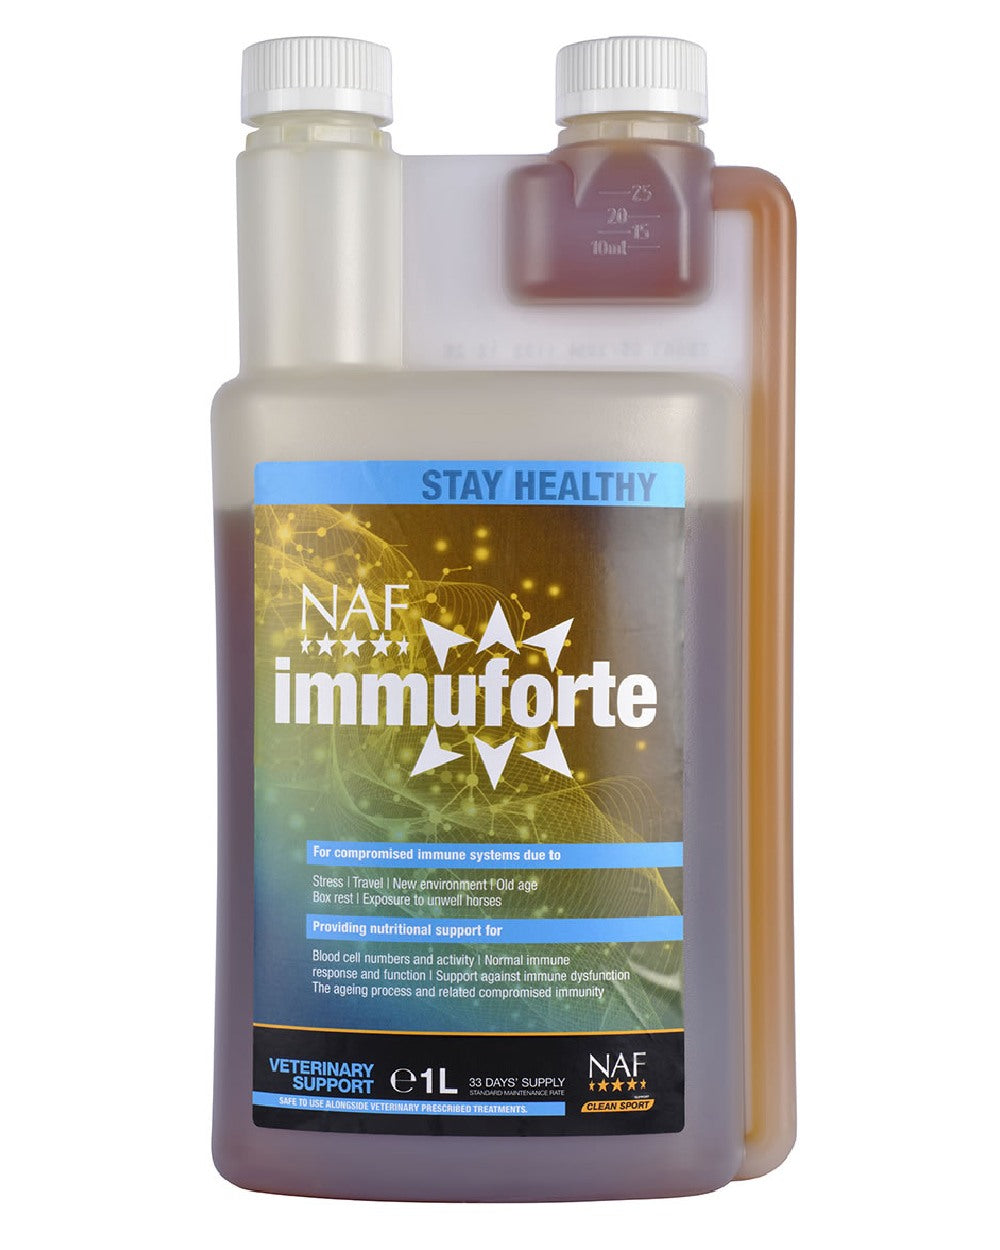 NAF Immuforte Liquid 1lt on white background